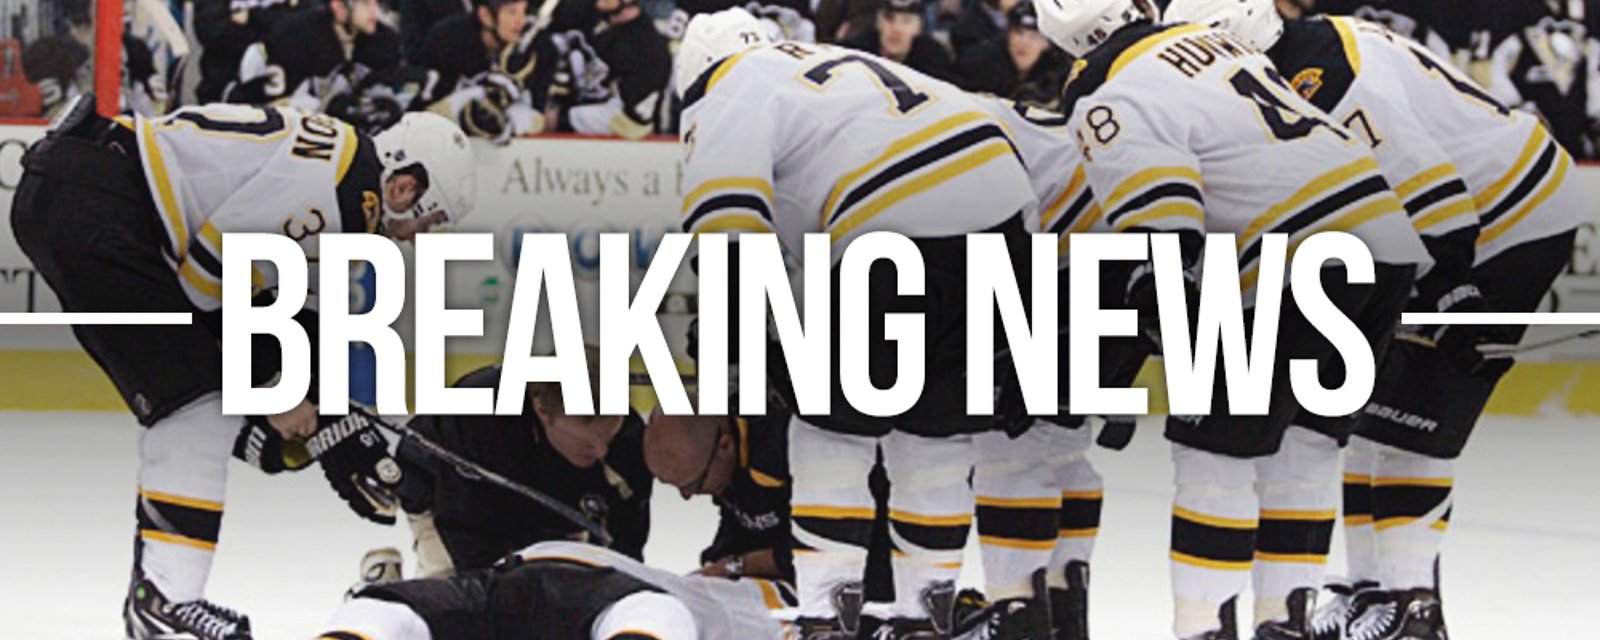 Former NHL star blasts NHL for concussion protocol 